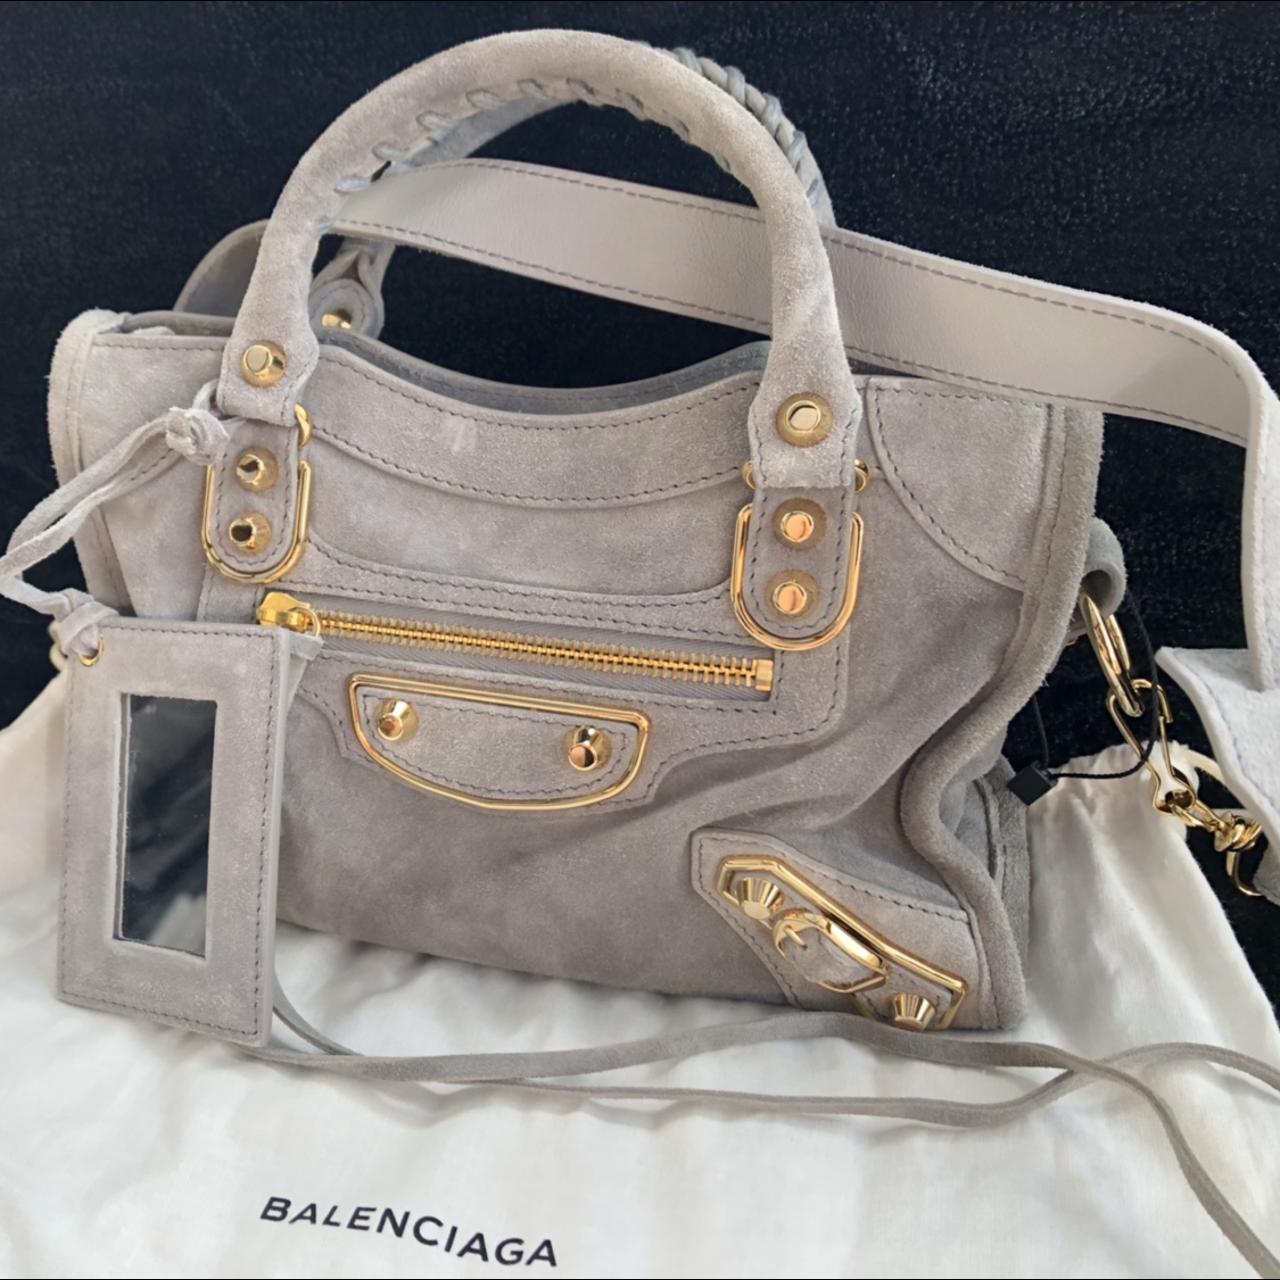 Authentic balenciaga city bag w big silver hardware - Depop